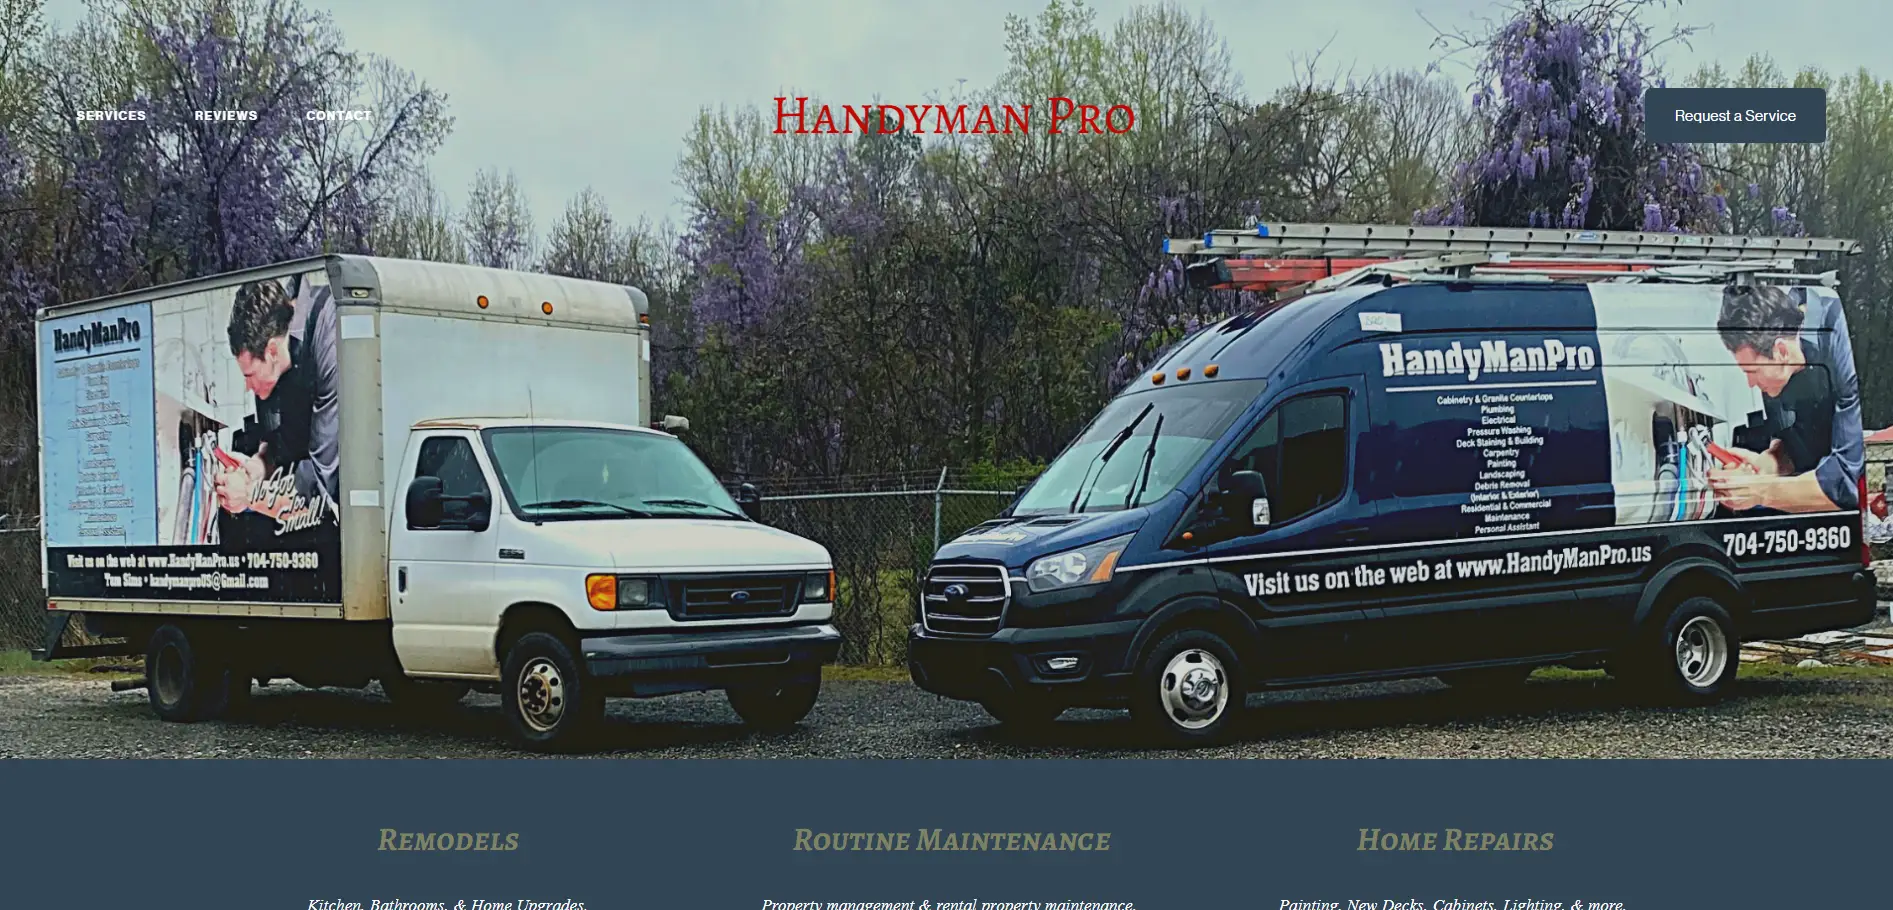 Handyman Pro - handyman website template